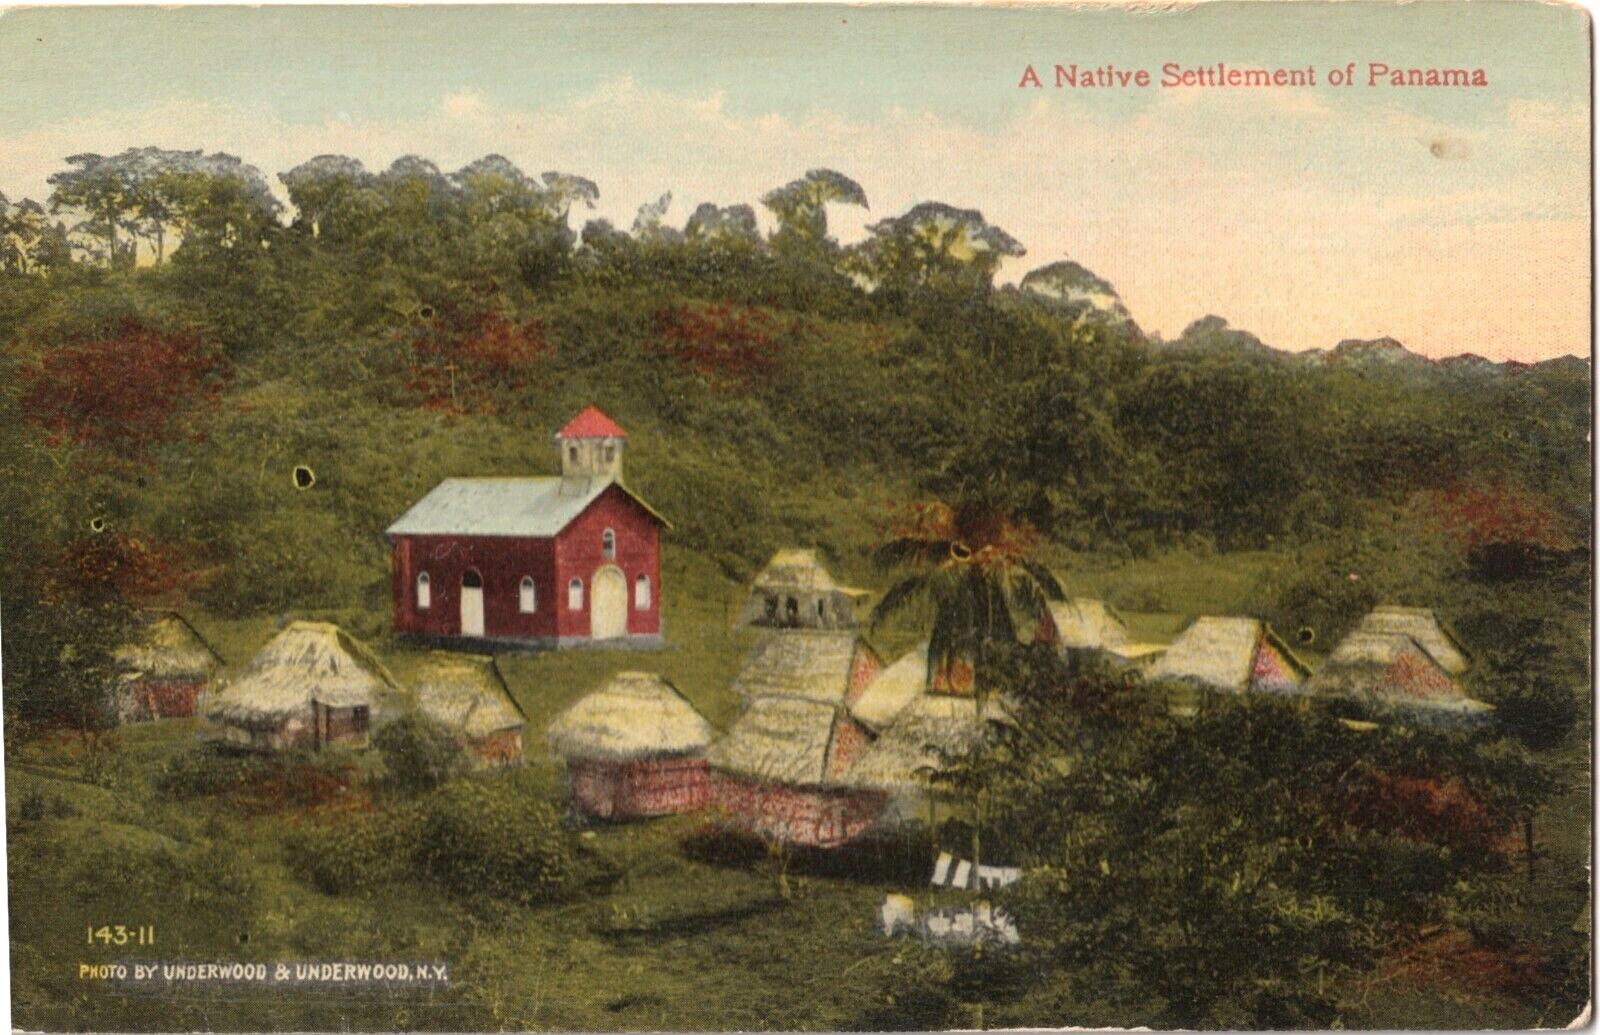 A Native Settlement of Panama-Antique Postcard-Panama Canal Construction era